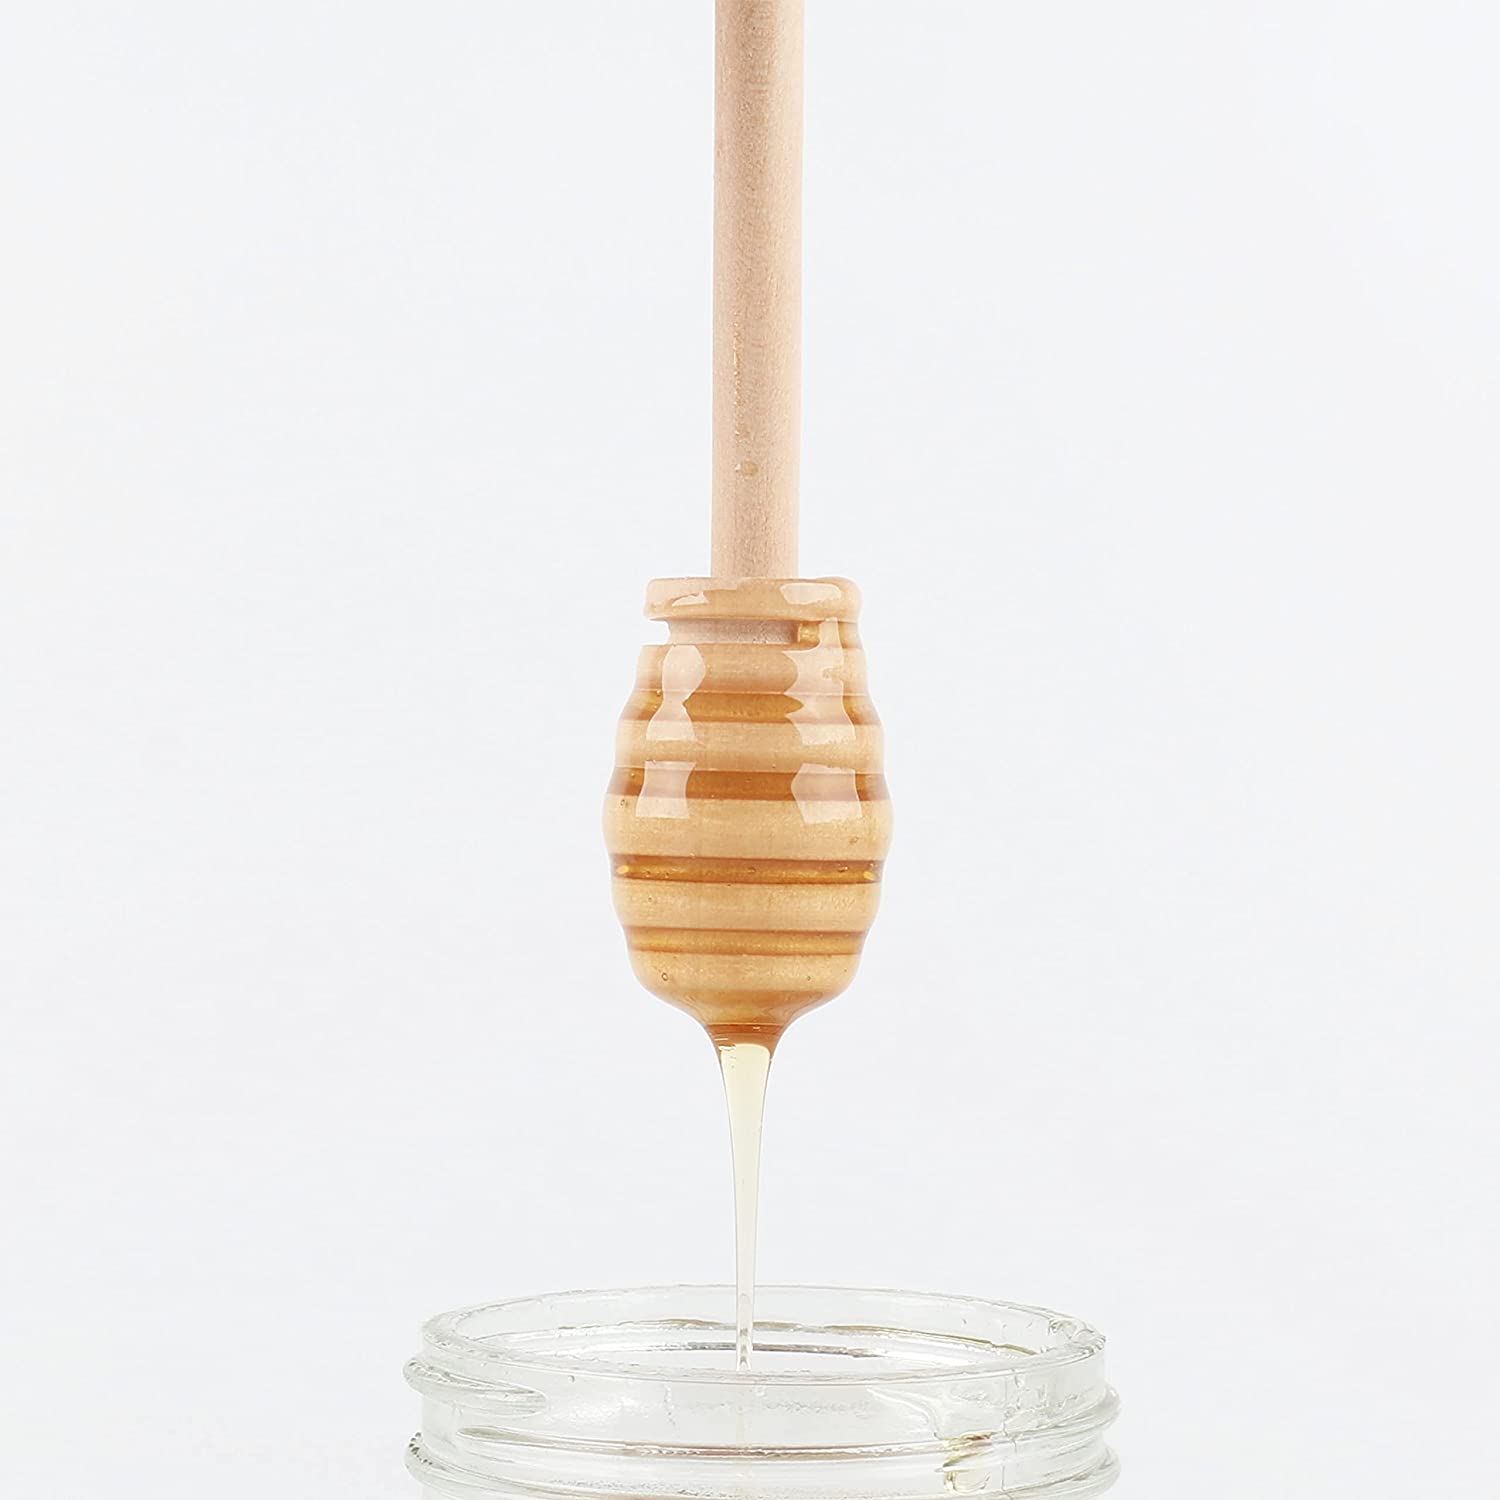 DESIOLE Wood Honey Stirrer Dipper Spoon Set 4